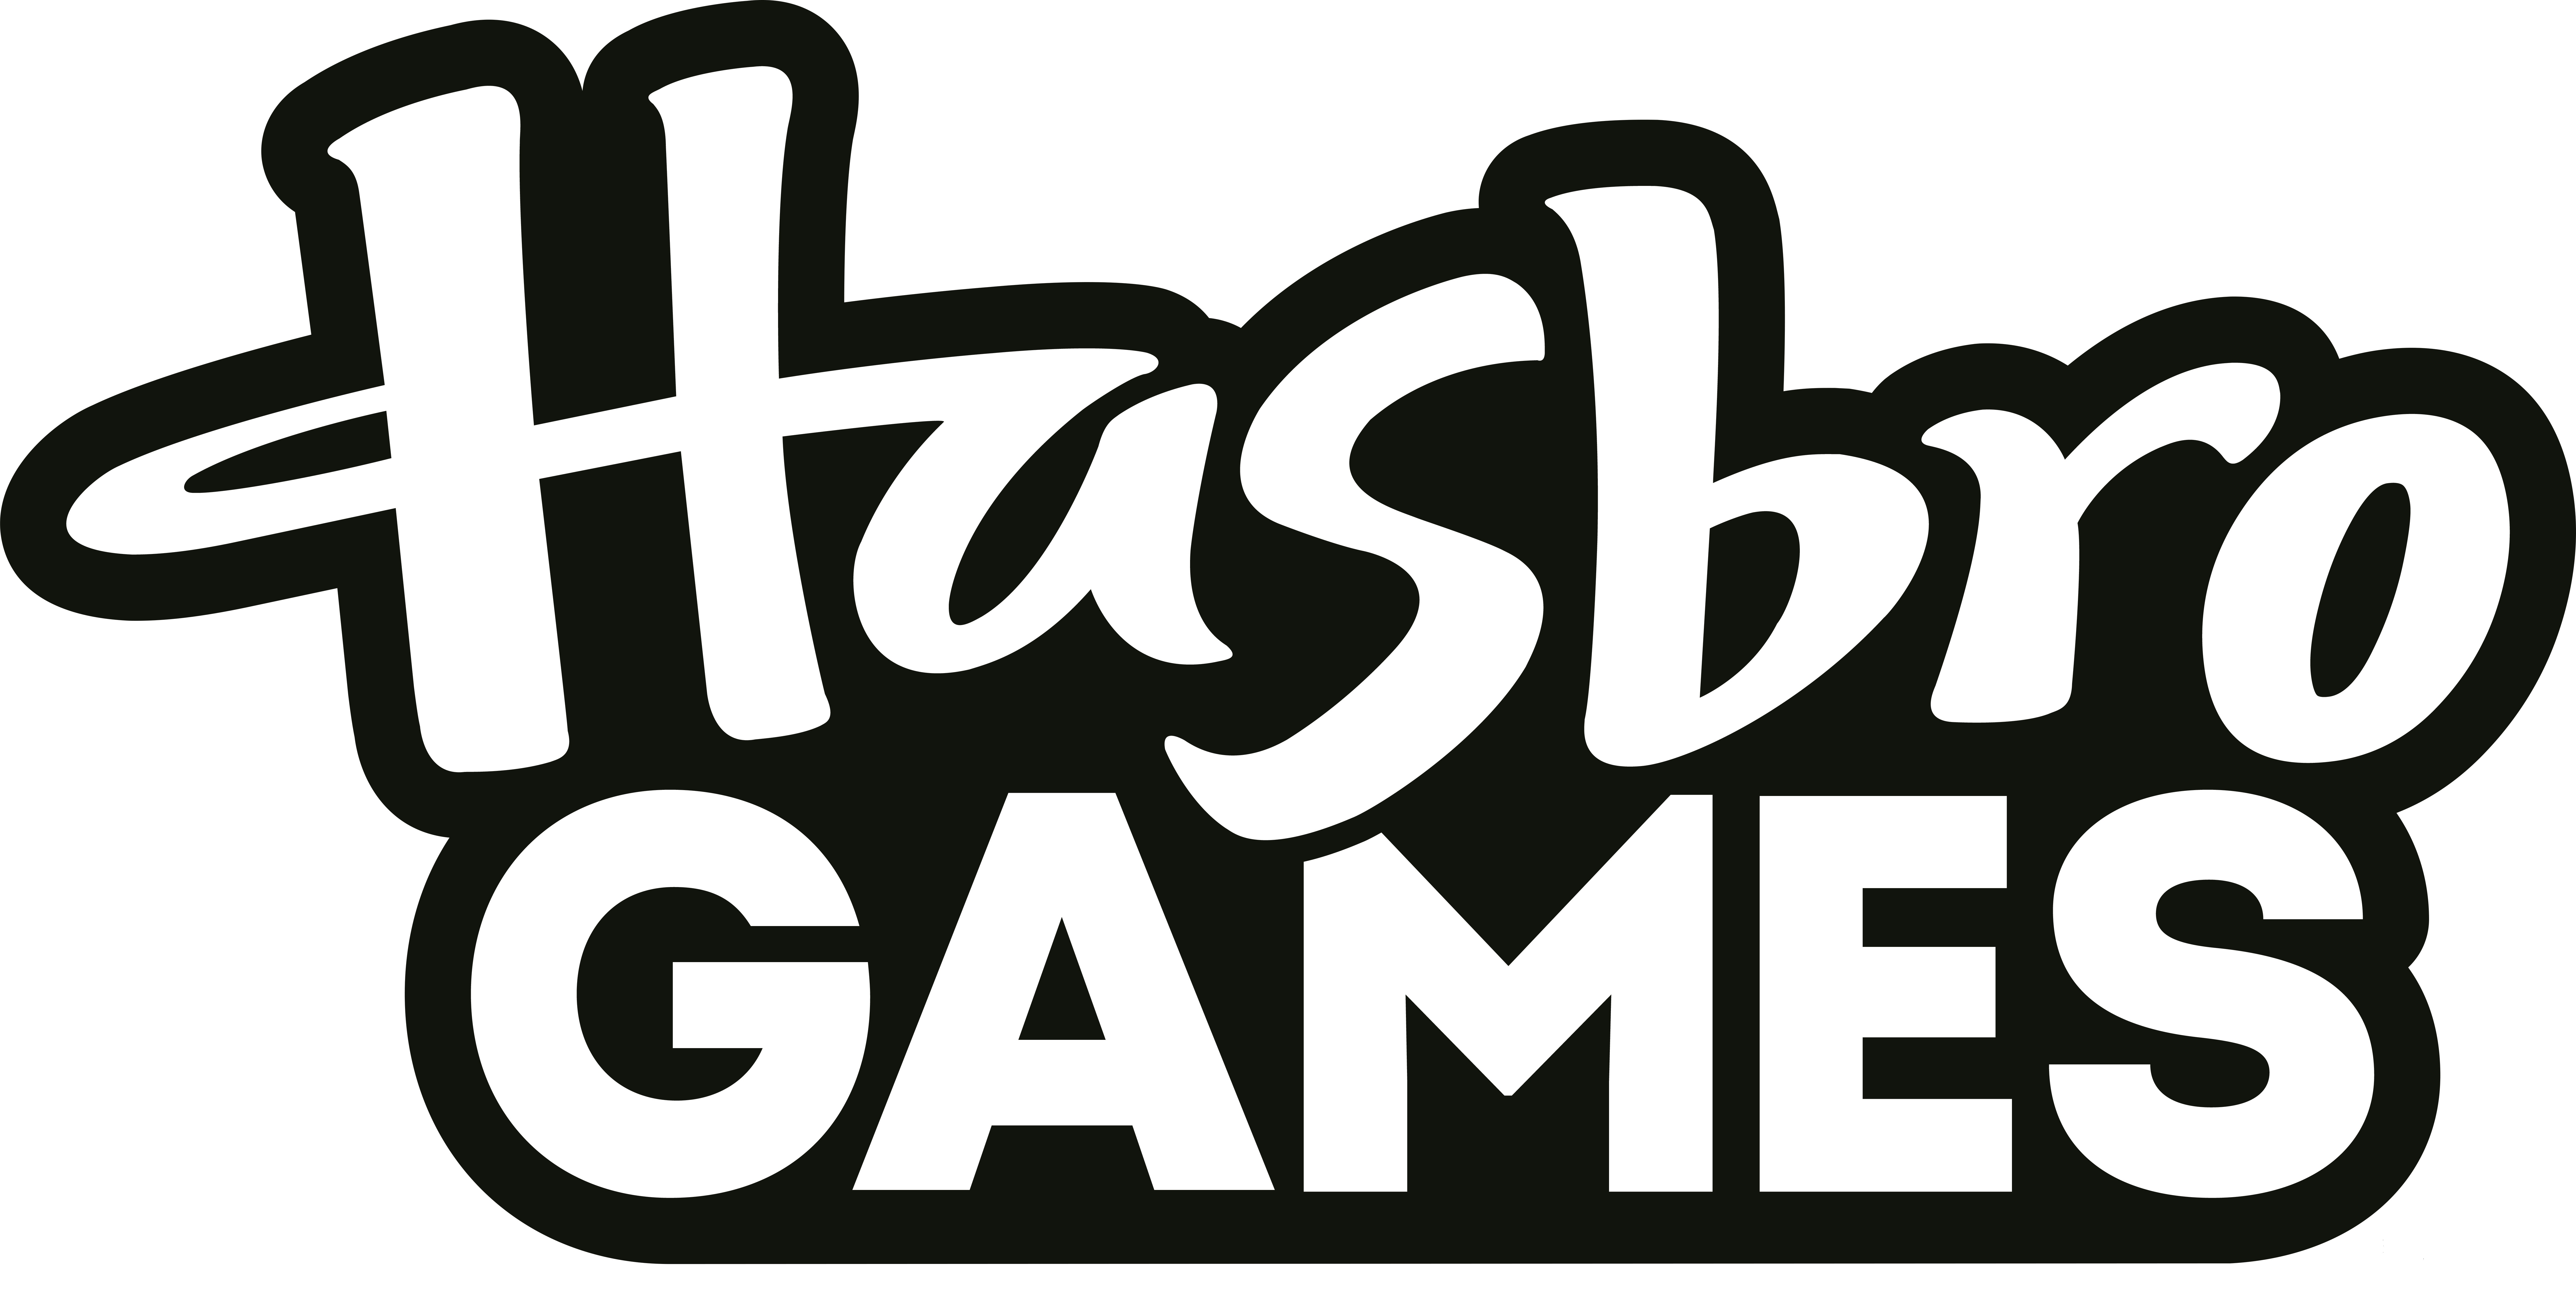  HASBRO GAMES